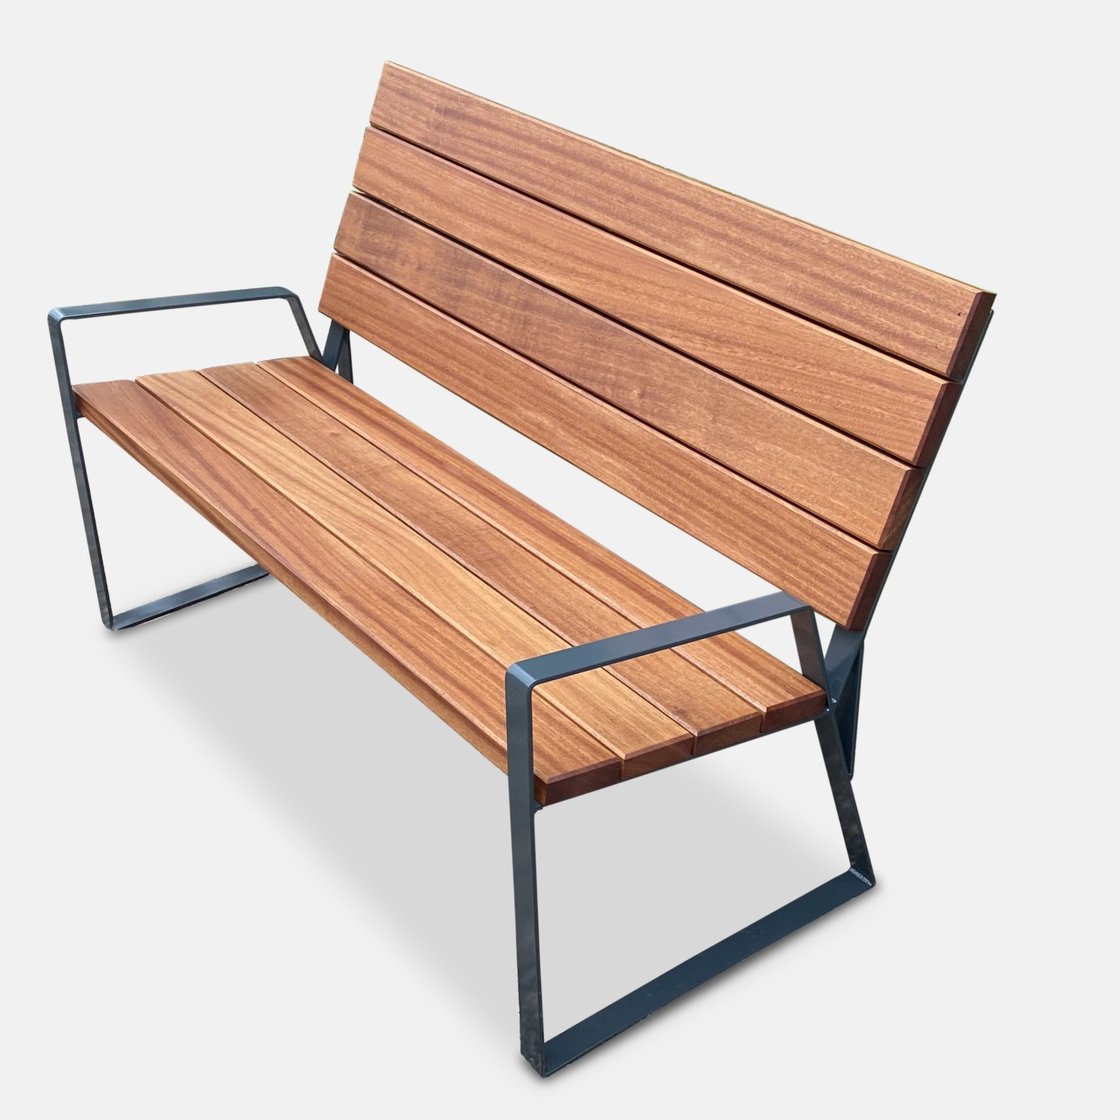 Products Handcrafted Premium Outdoor Garden Bench, Wooden Garden Furniture Outdoor Dining